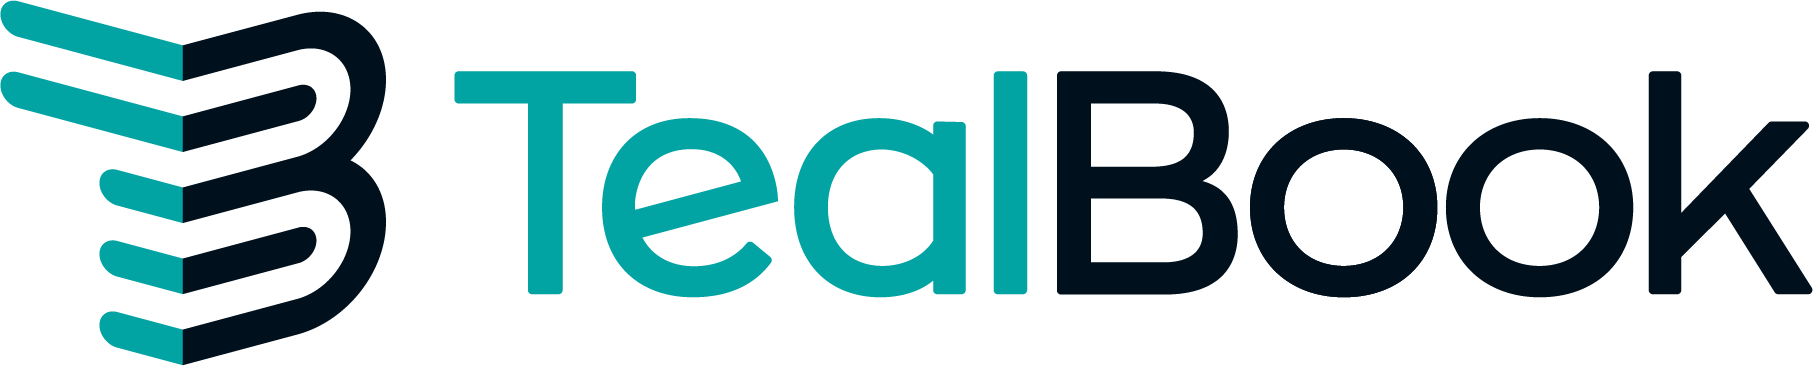 tealbook-logo